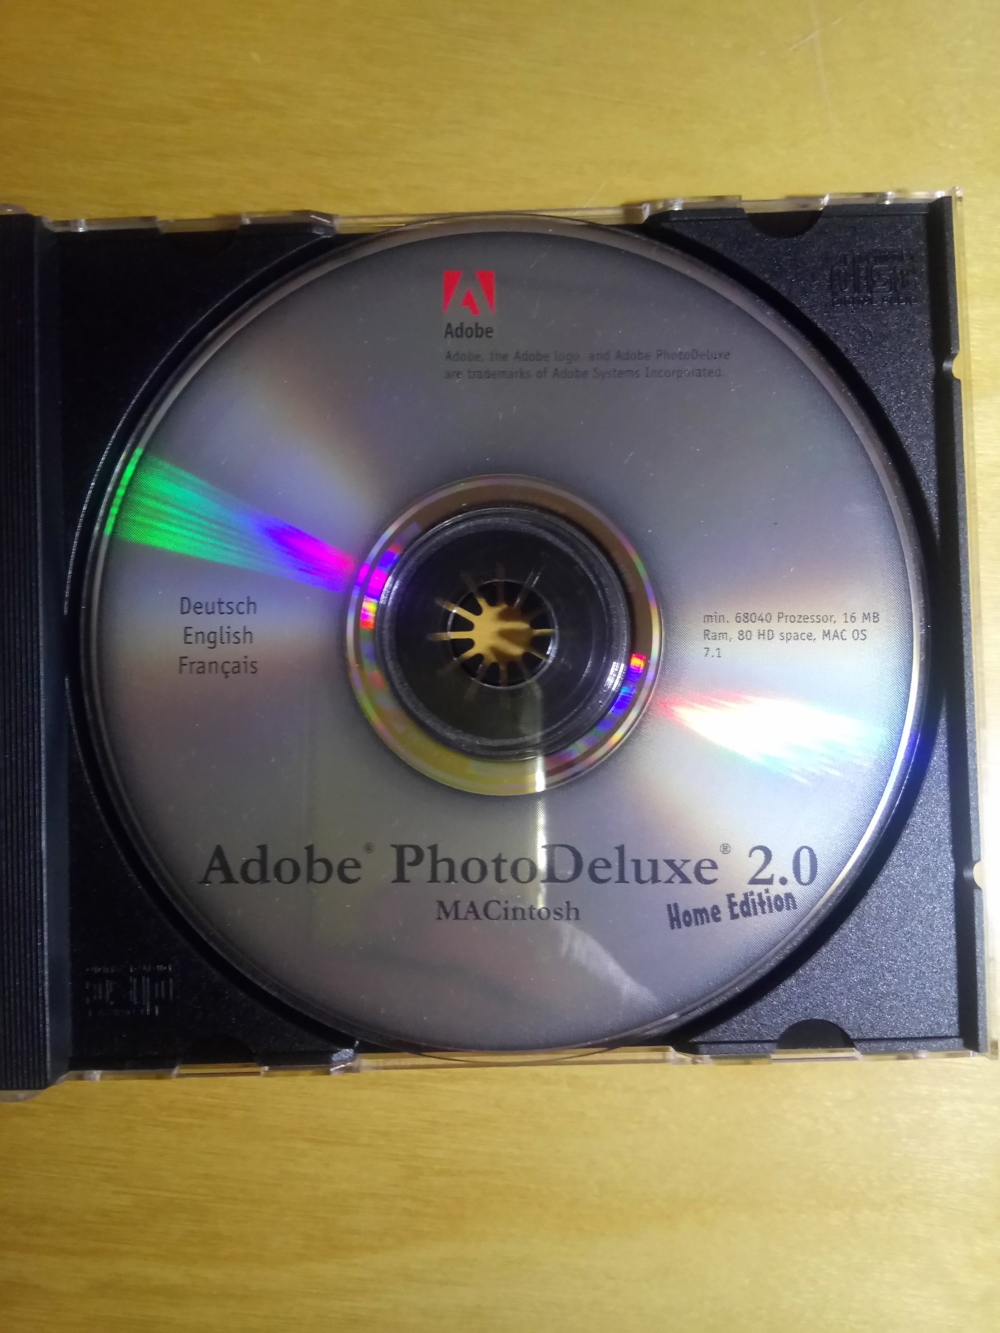 Adobe PhotoDeluxe 2.0